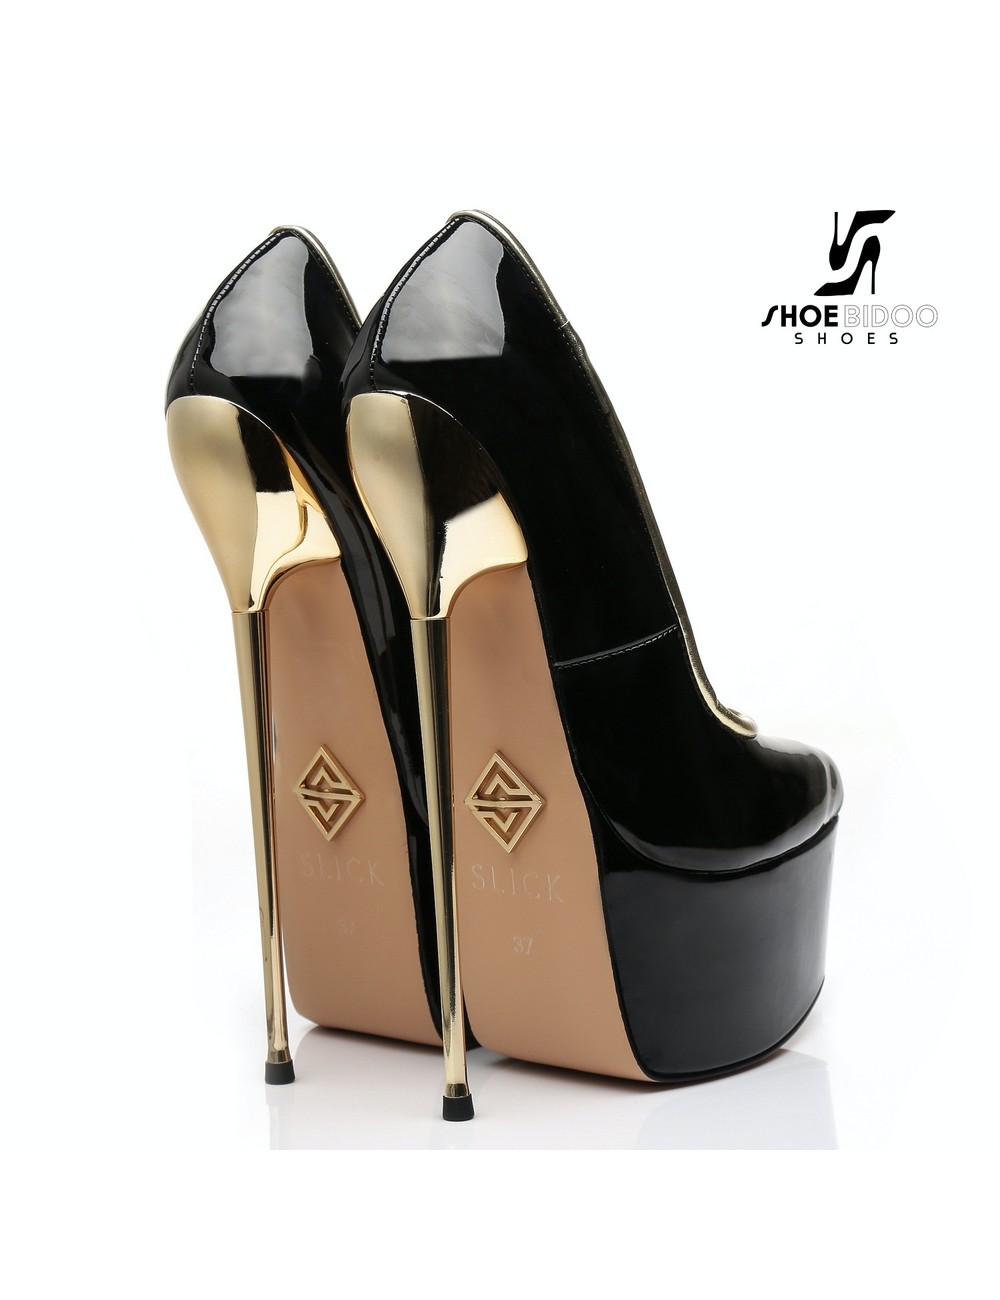 SLICK Black shiny Giaro ultra Fetish platform pumps with gold heels